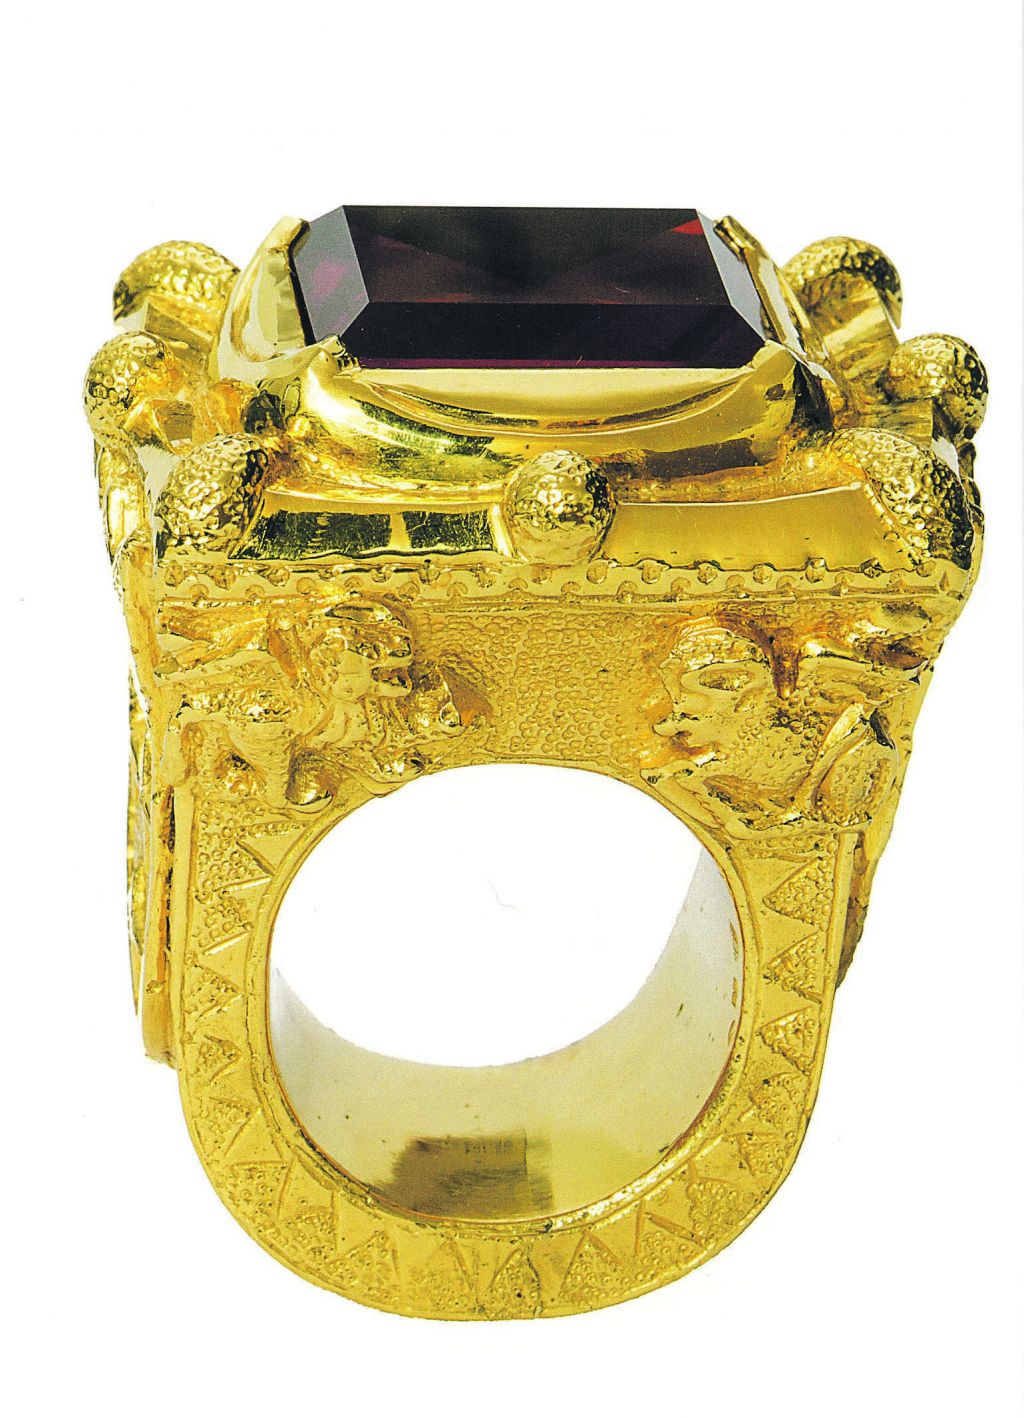 Papeški prstan v koprskem sarkofagu